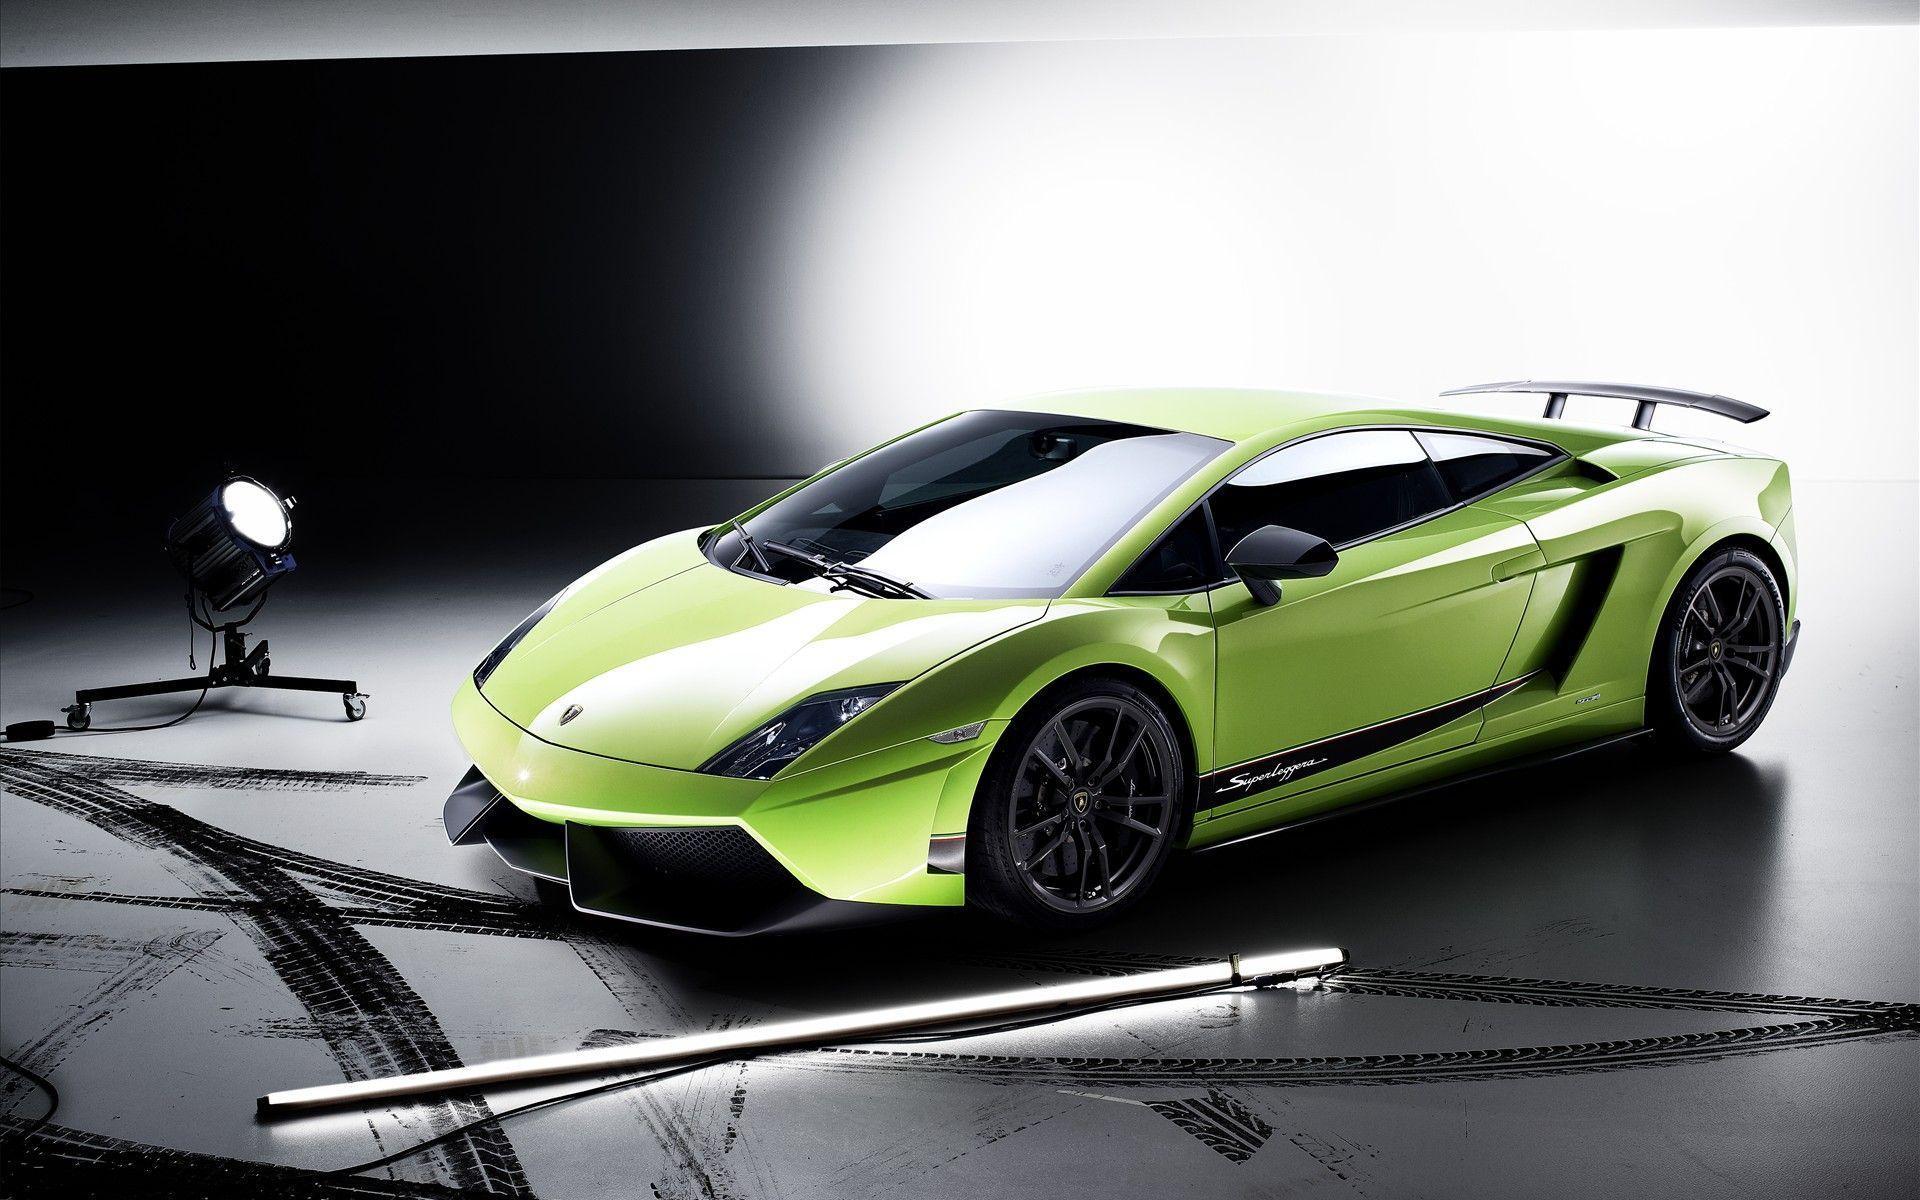 Fonds d&;écran Lamborghini Gallardo Lp570 4 Superleggera, tous les